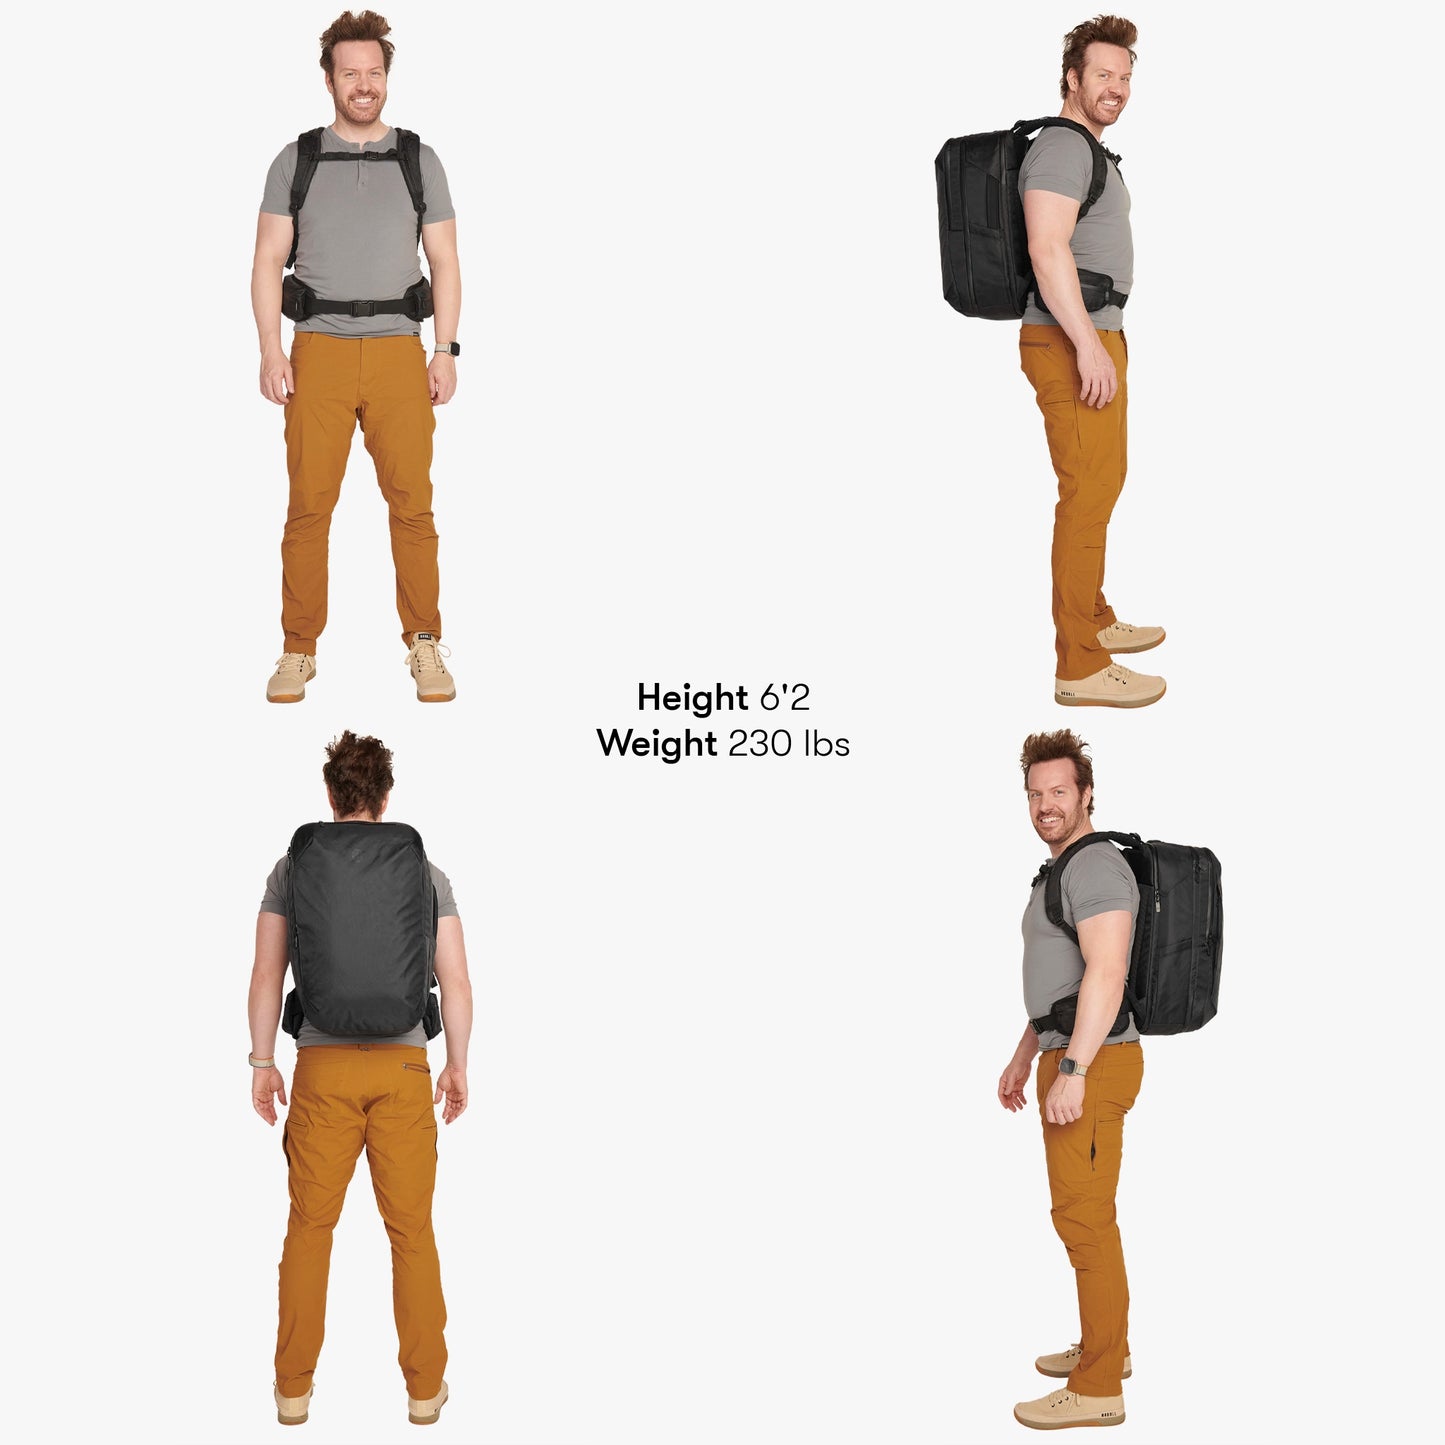 Travel Backpack Pro 40L